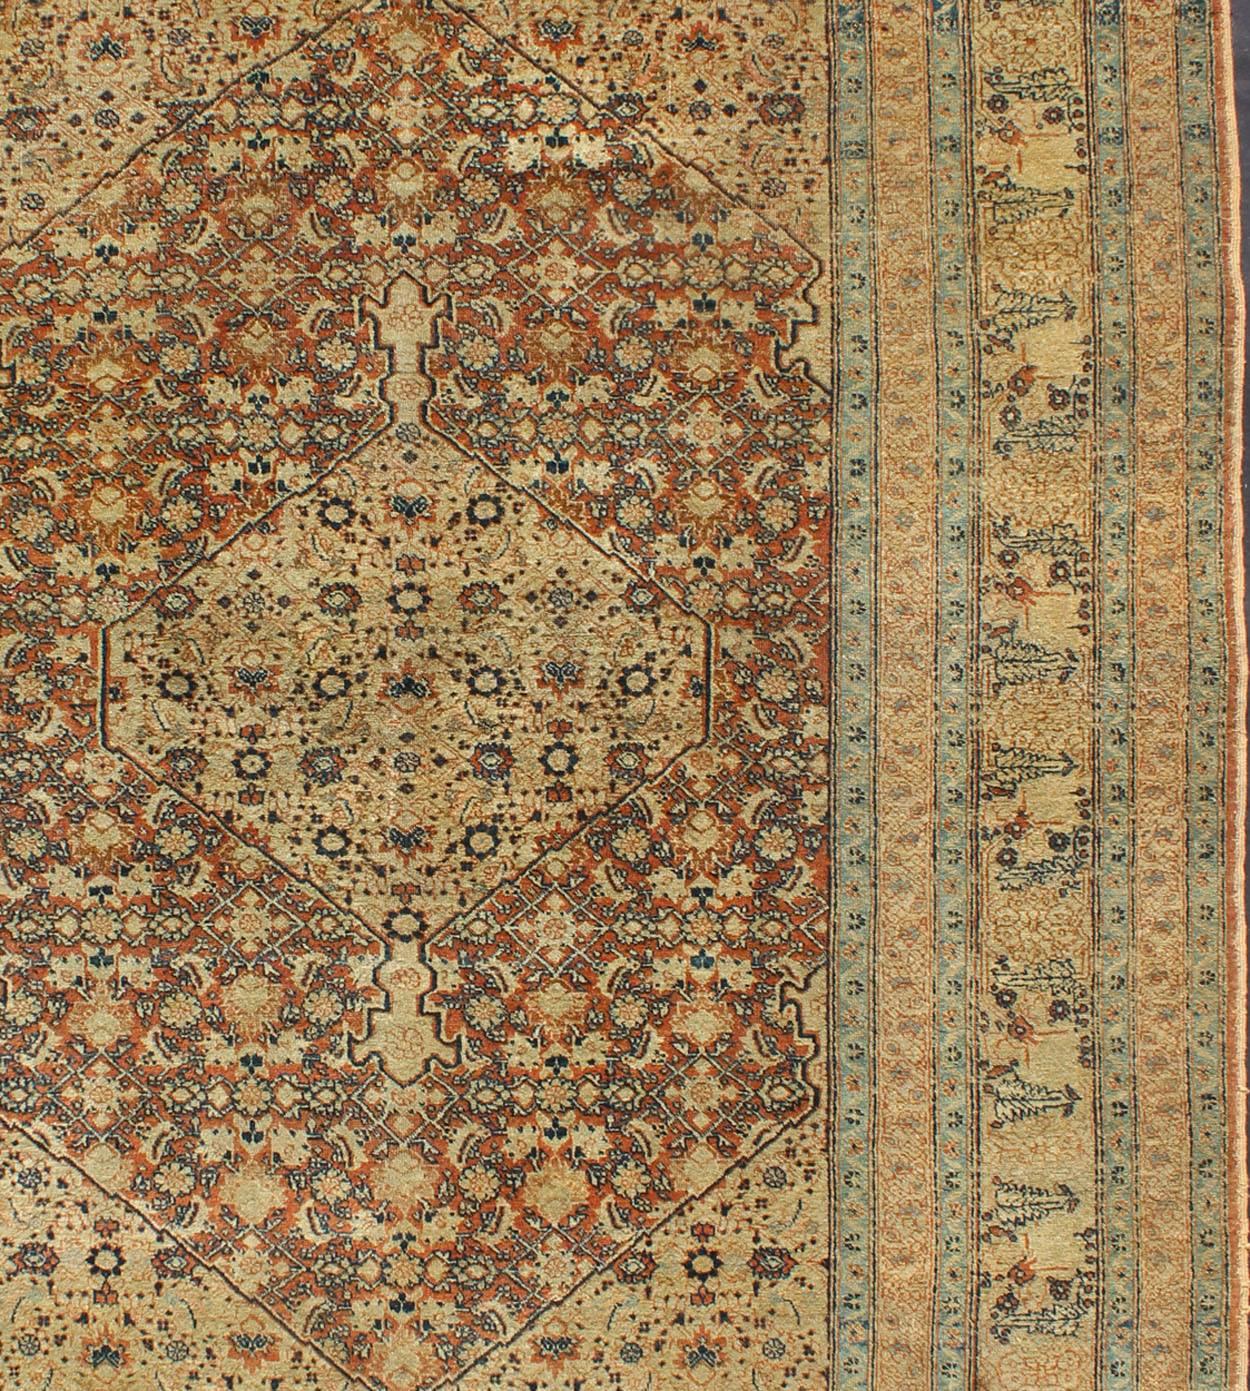 Antique Persian Tabriz Haj Jalili Fine Rug in Earth tones, Red Brown Background In Good Condition For Sale In Atlanta, GA